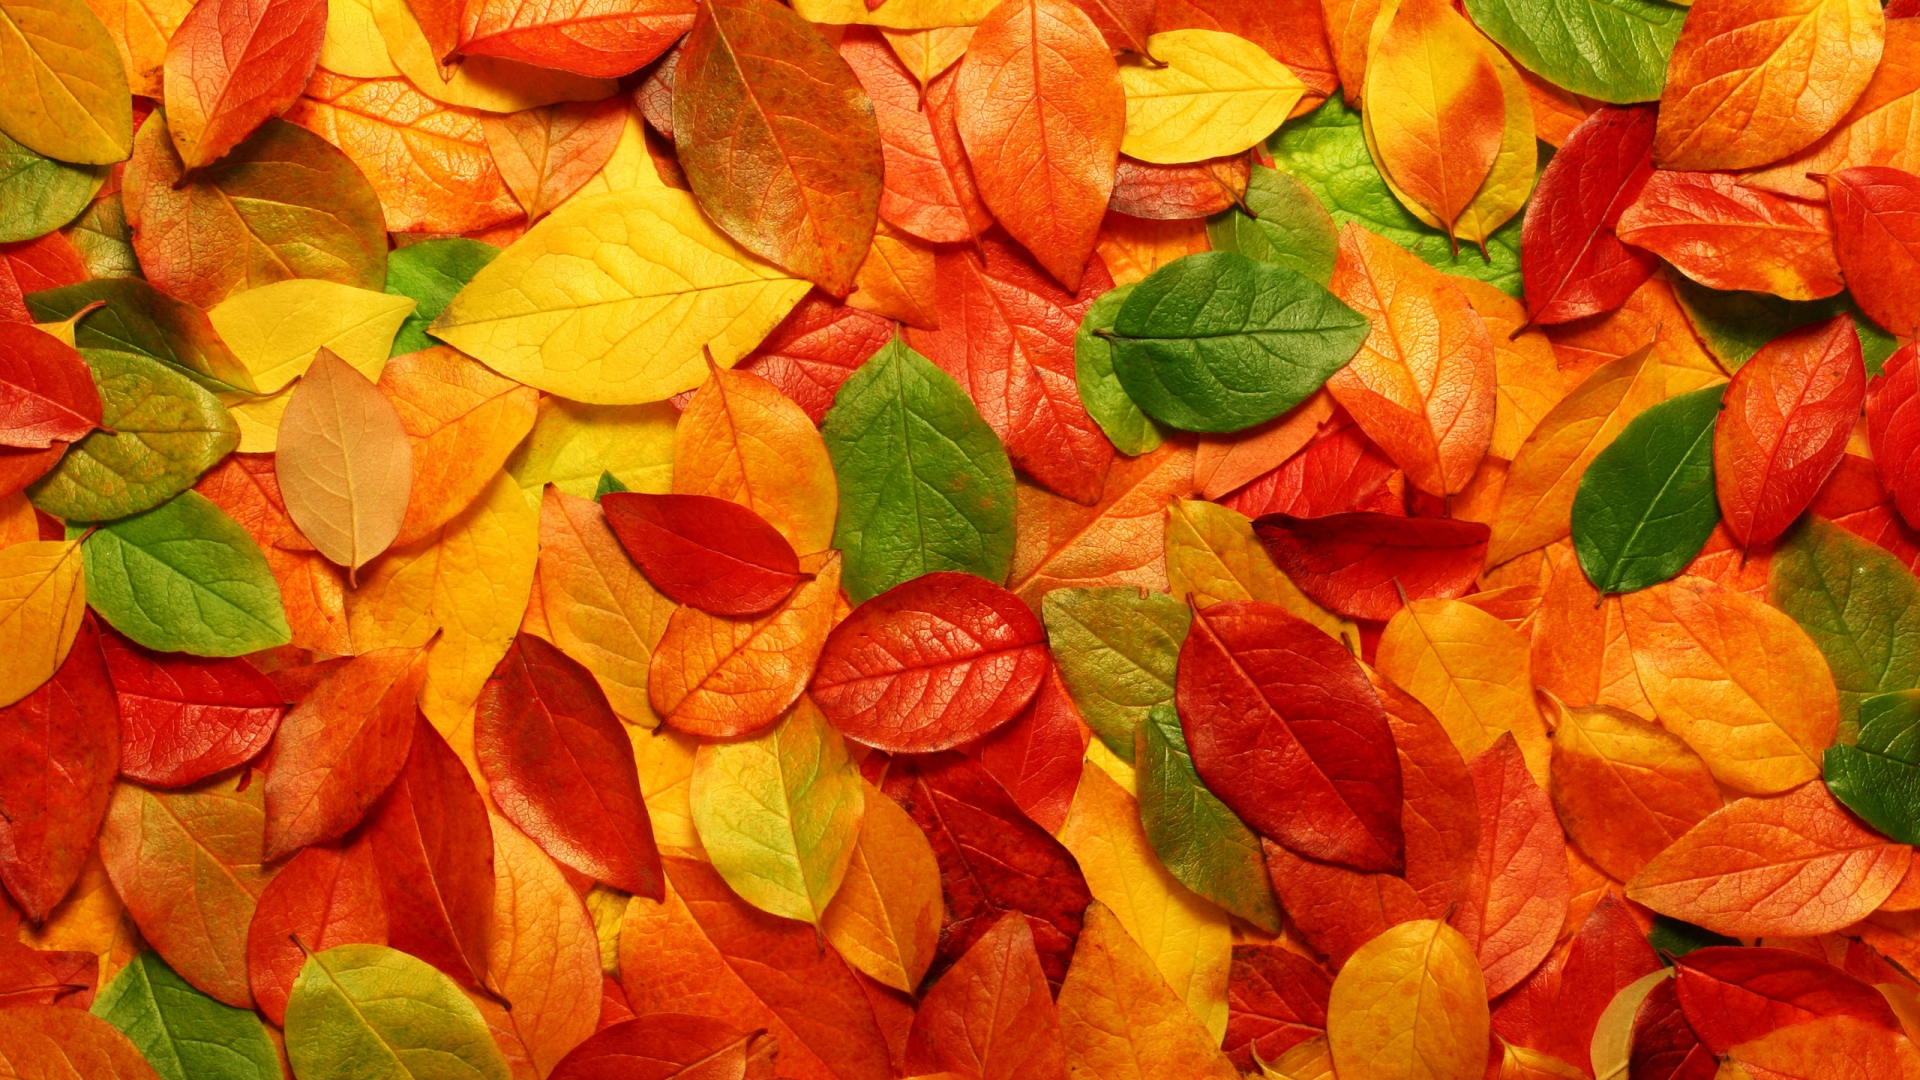 Autumn carpet of leaves for 1920 x 1080 HDTV 1080p resolution